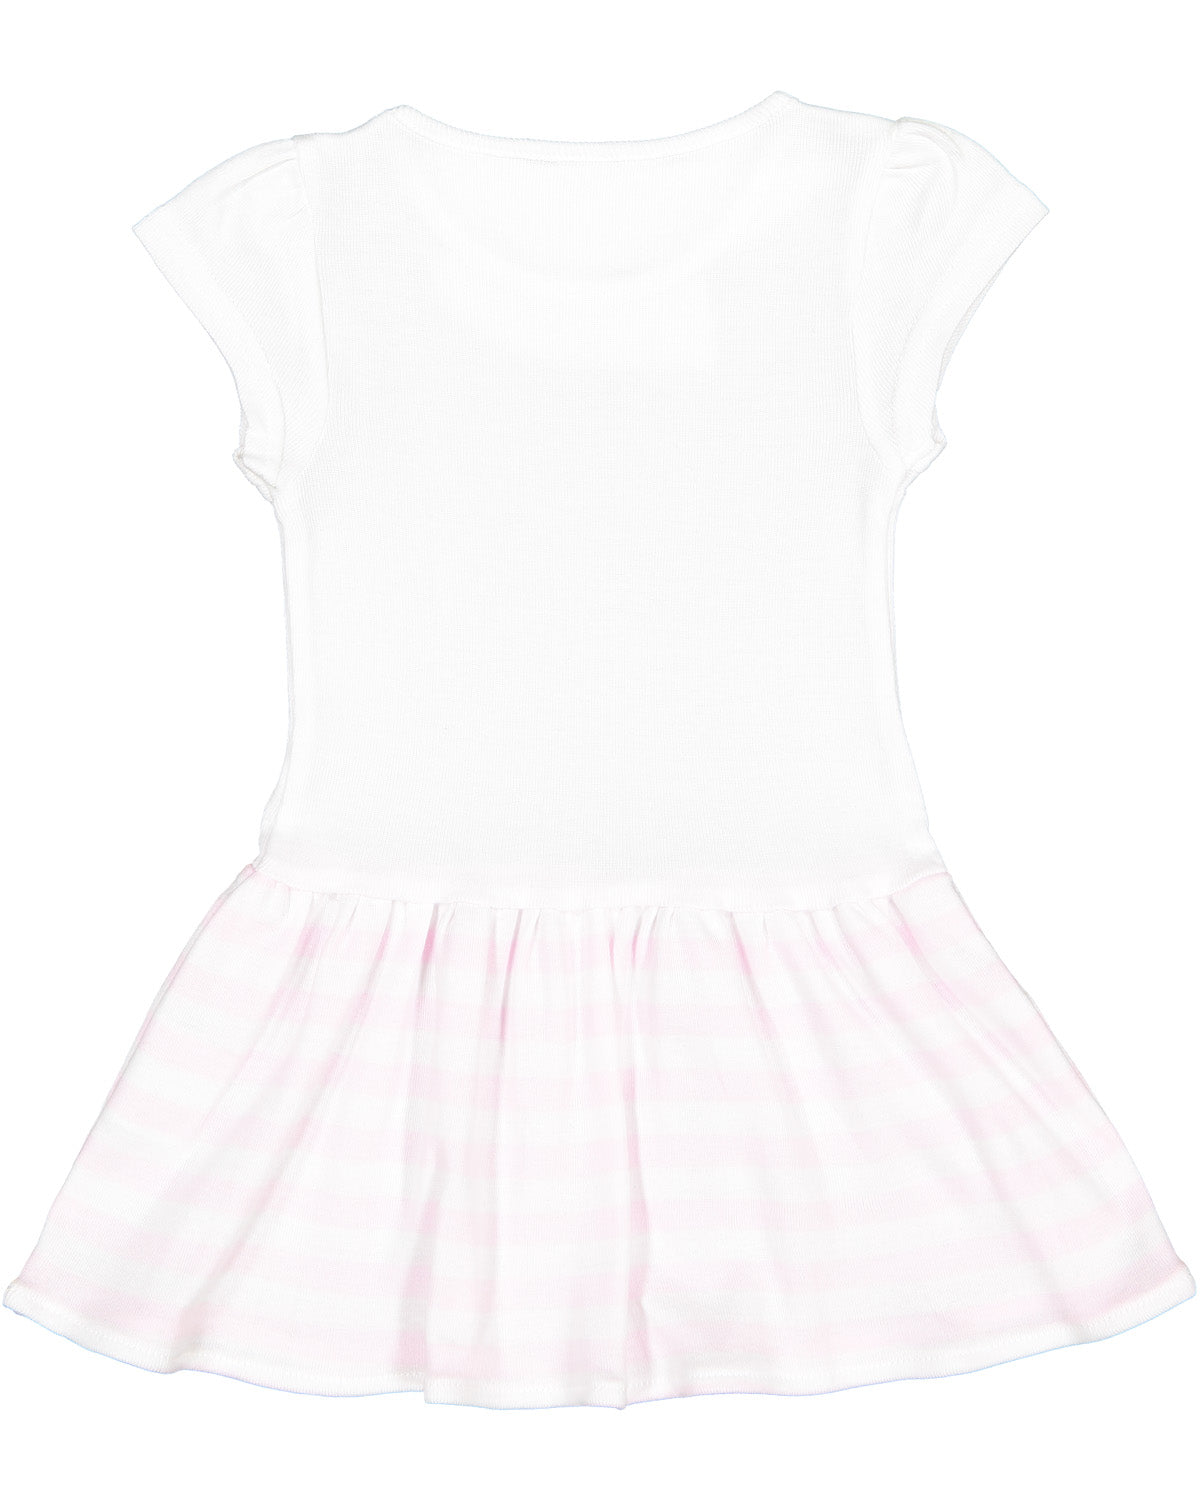 Baby Cotton Rib Dress, (Sizes: 6M - 24M), White with Light Pink Stripes